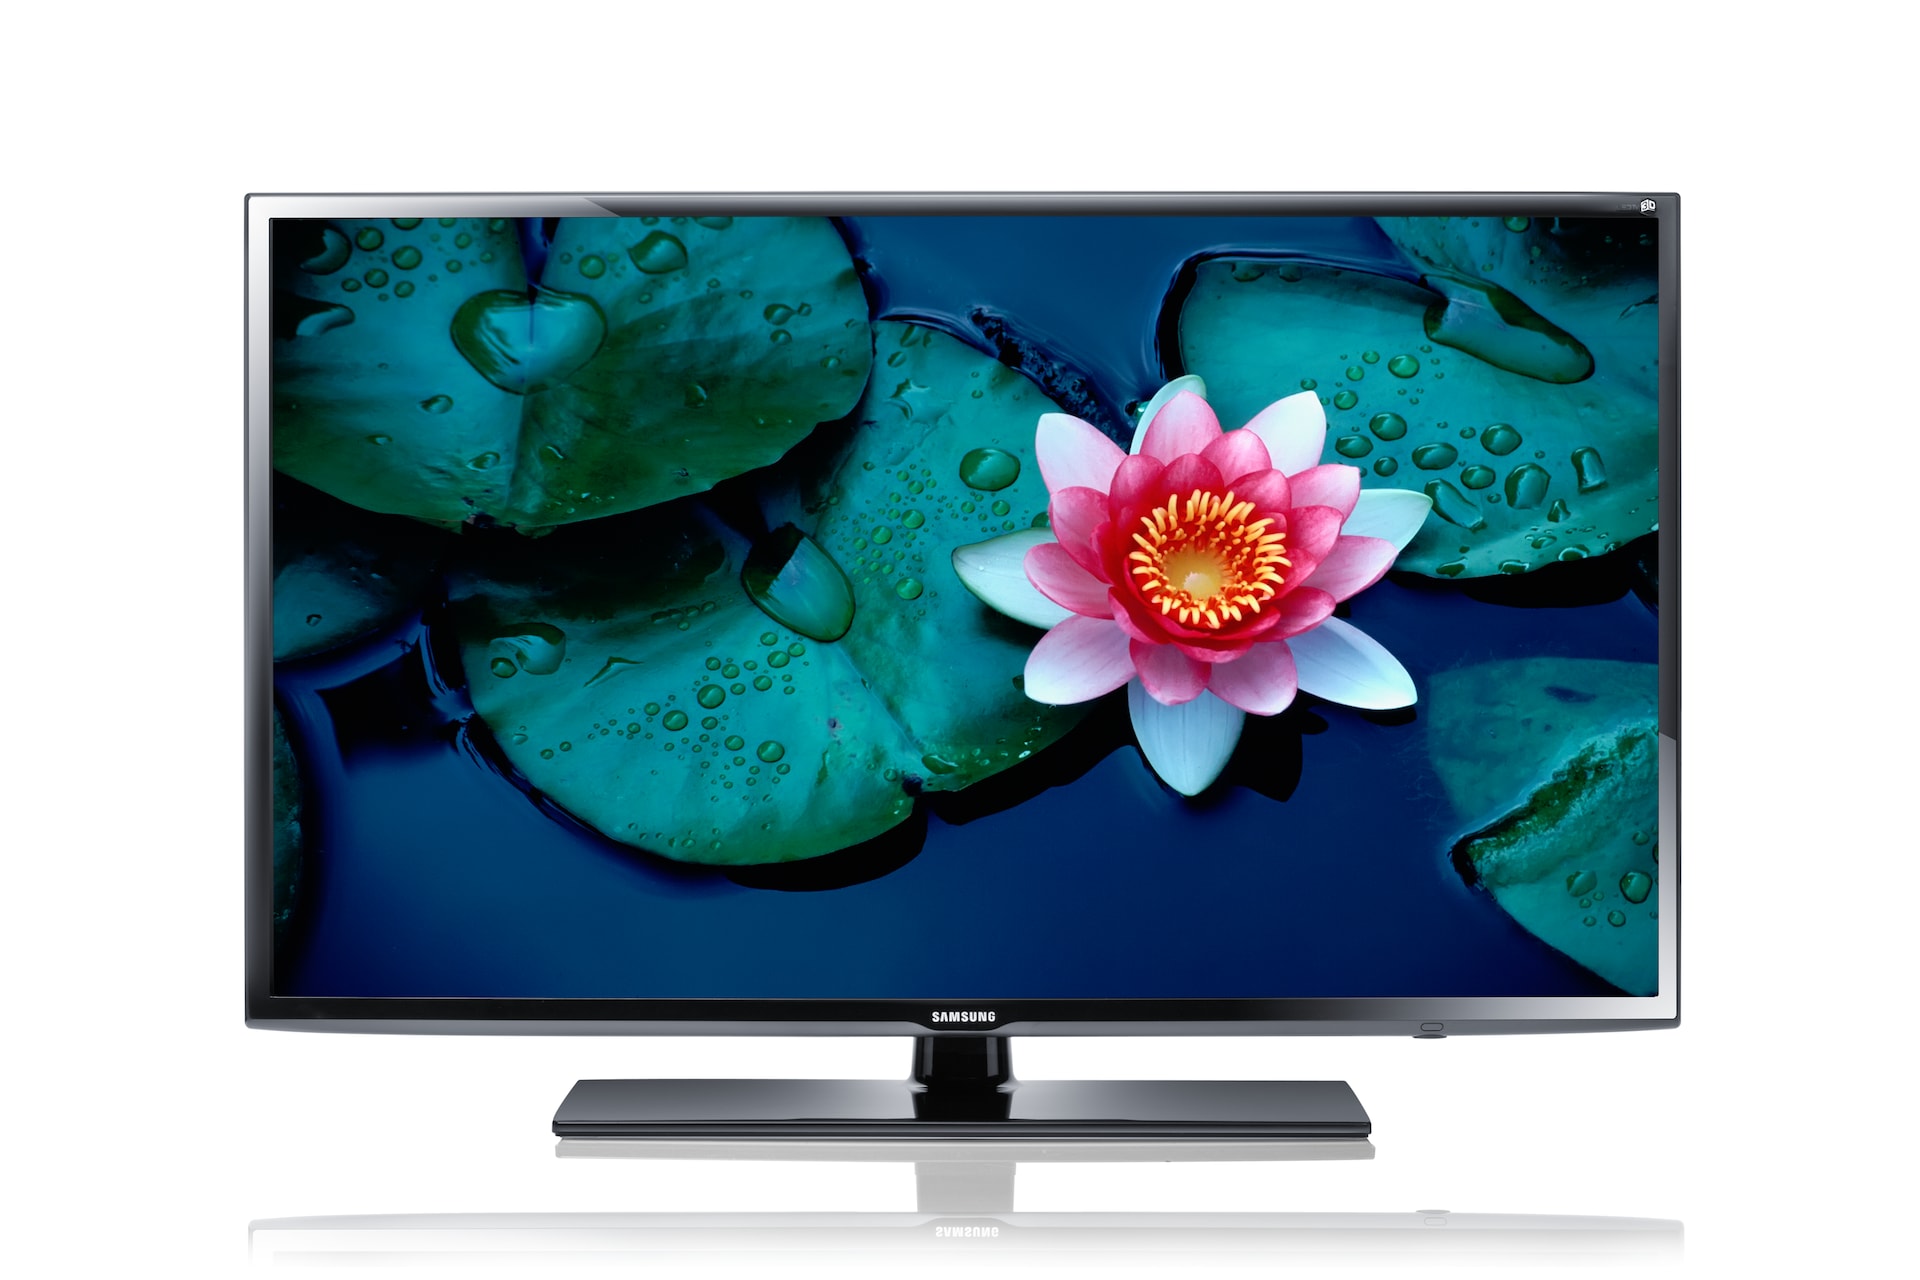 Televisor Samsung 32 Pulgadas LED HD Smart TV